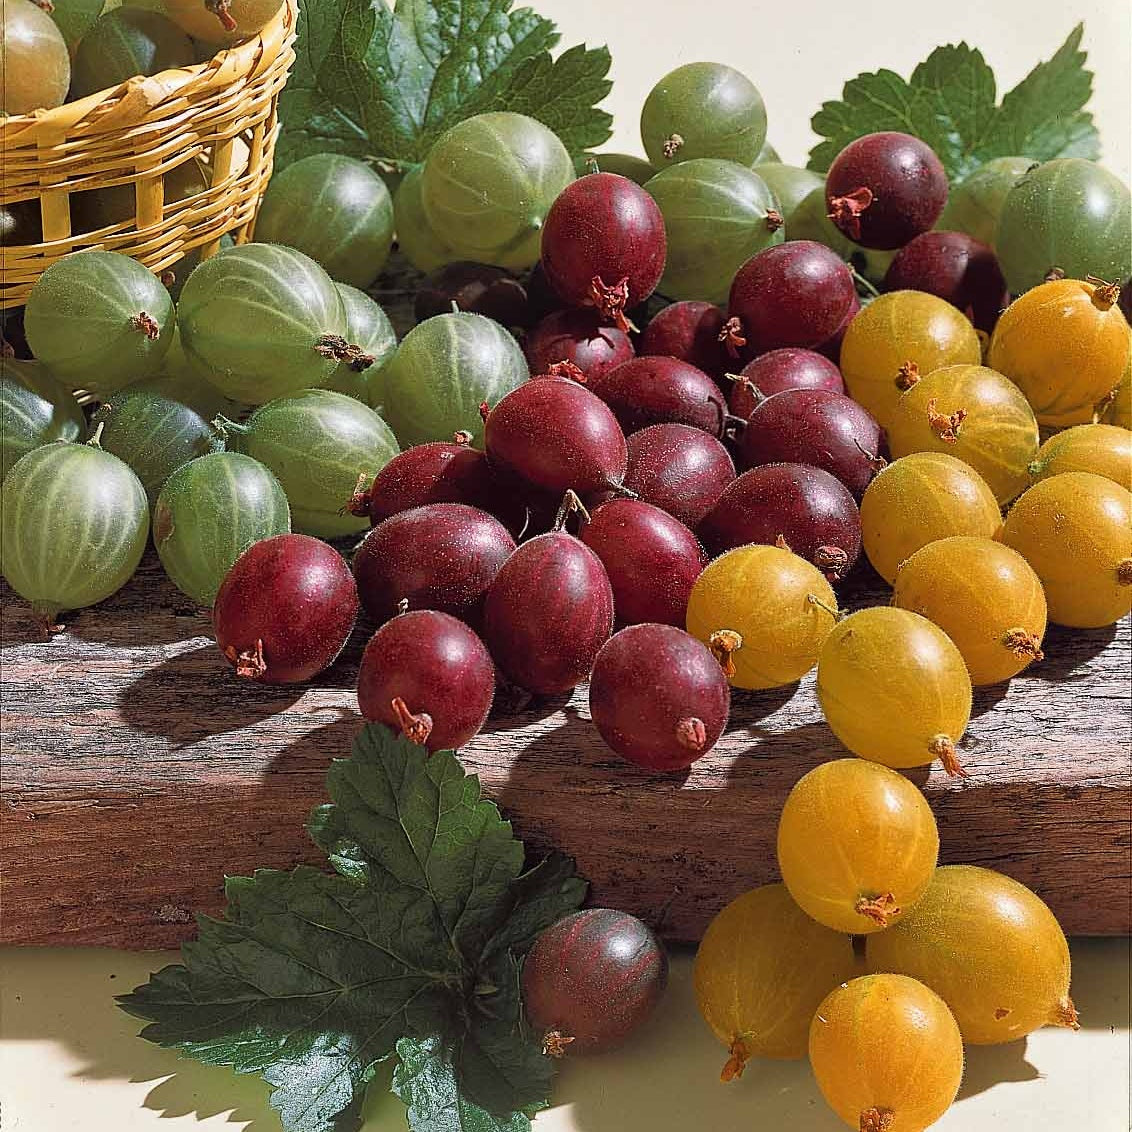 Collection de groseilliers à maquereaux - Ribes uva-crispa winhams industry, anglaise blanch - Plantes